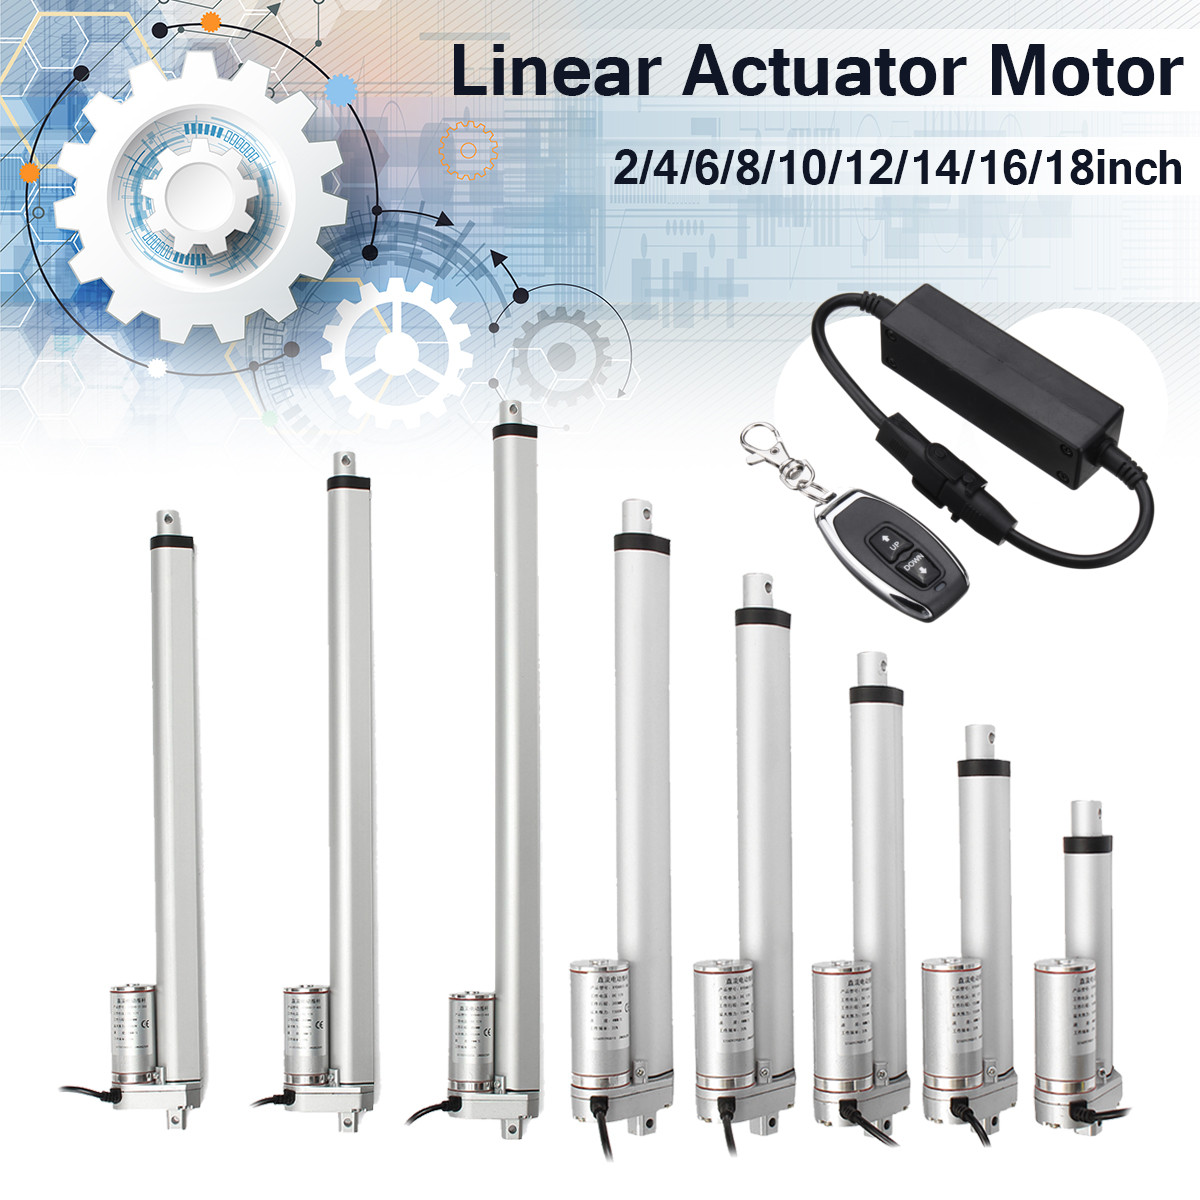 1500N-12V-4681012141618-inch-Linear-Actuator-Adjustable-Actuator-Tor-Opener-Linear-Actuator-Motor-1115476-1